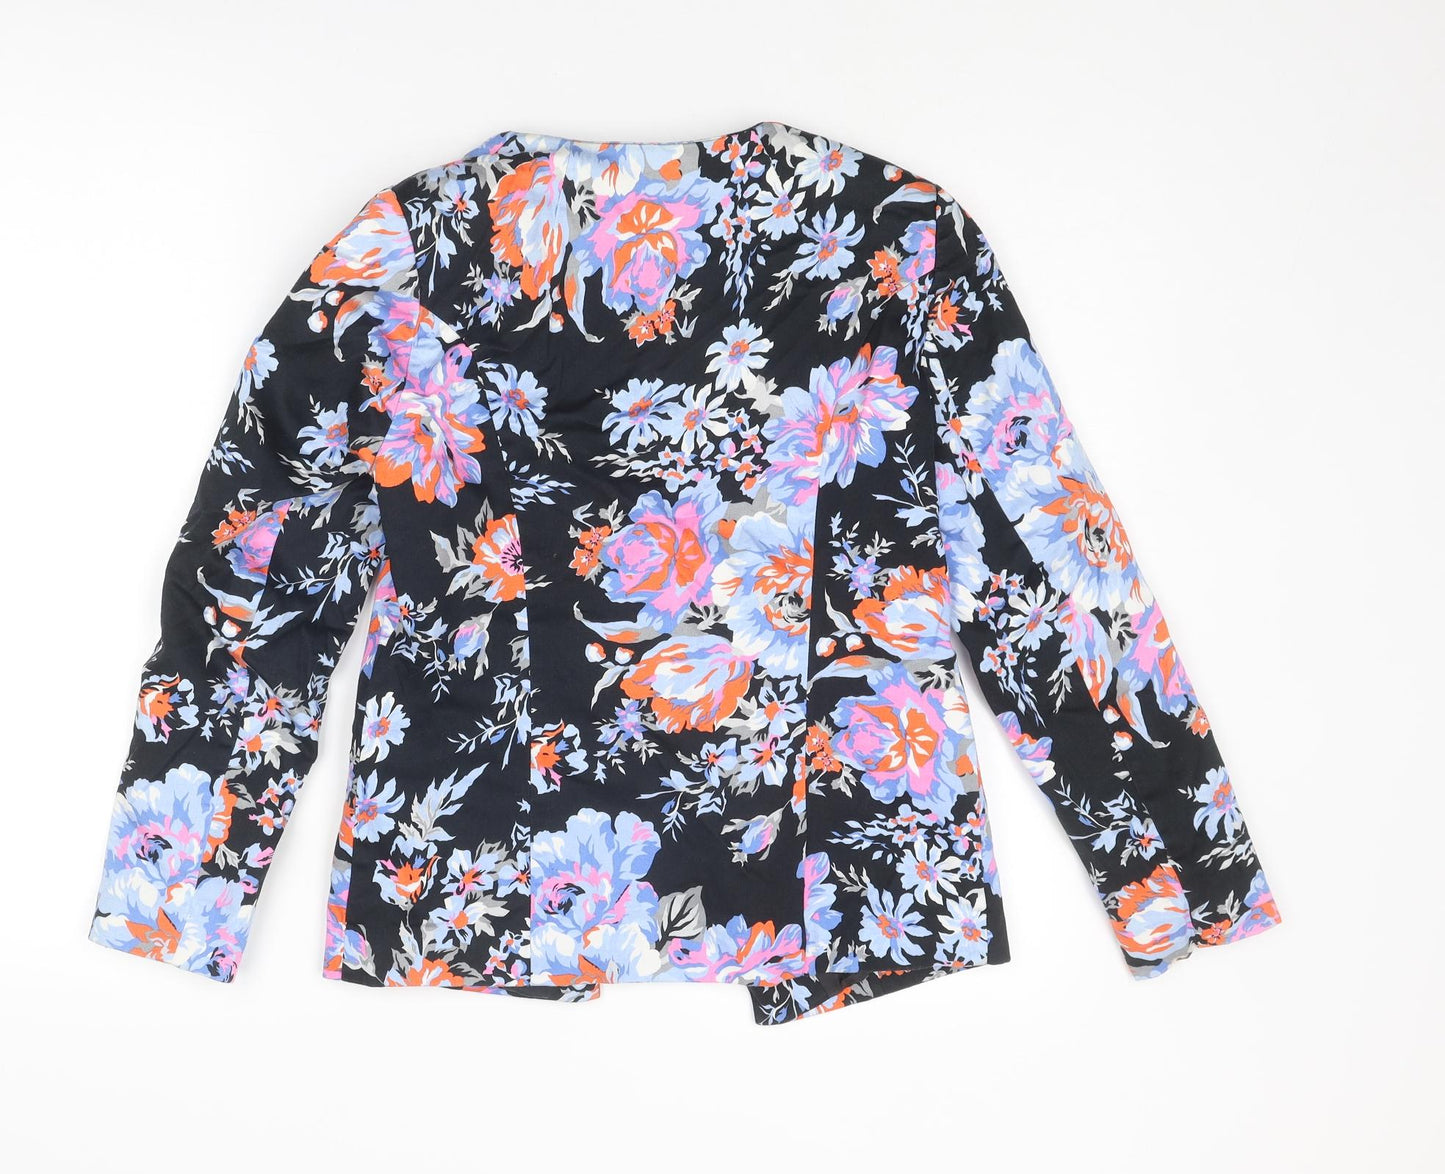 ASOS Womens Multicoloured Floral Jacket Blazer Size 10